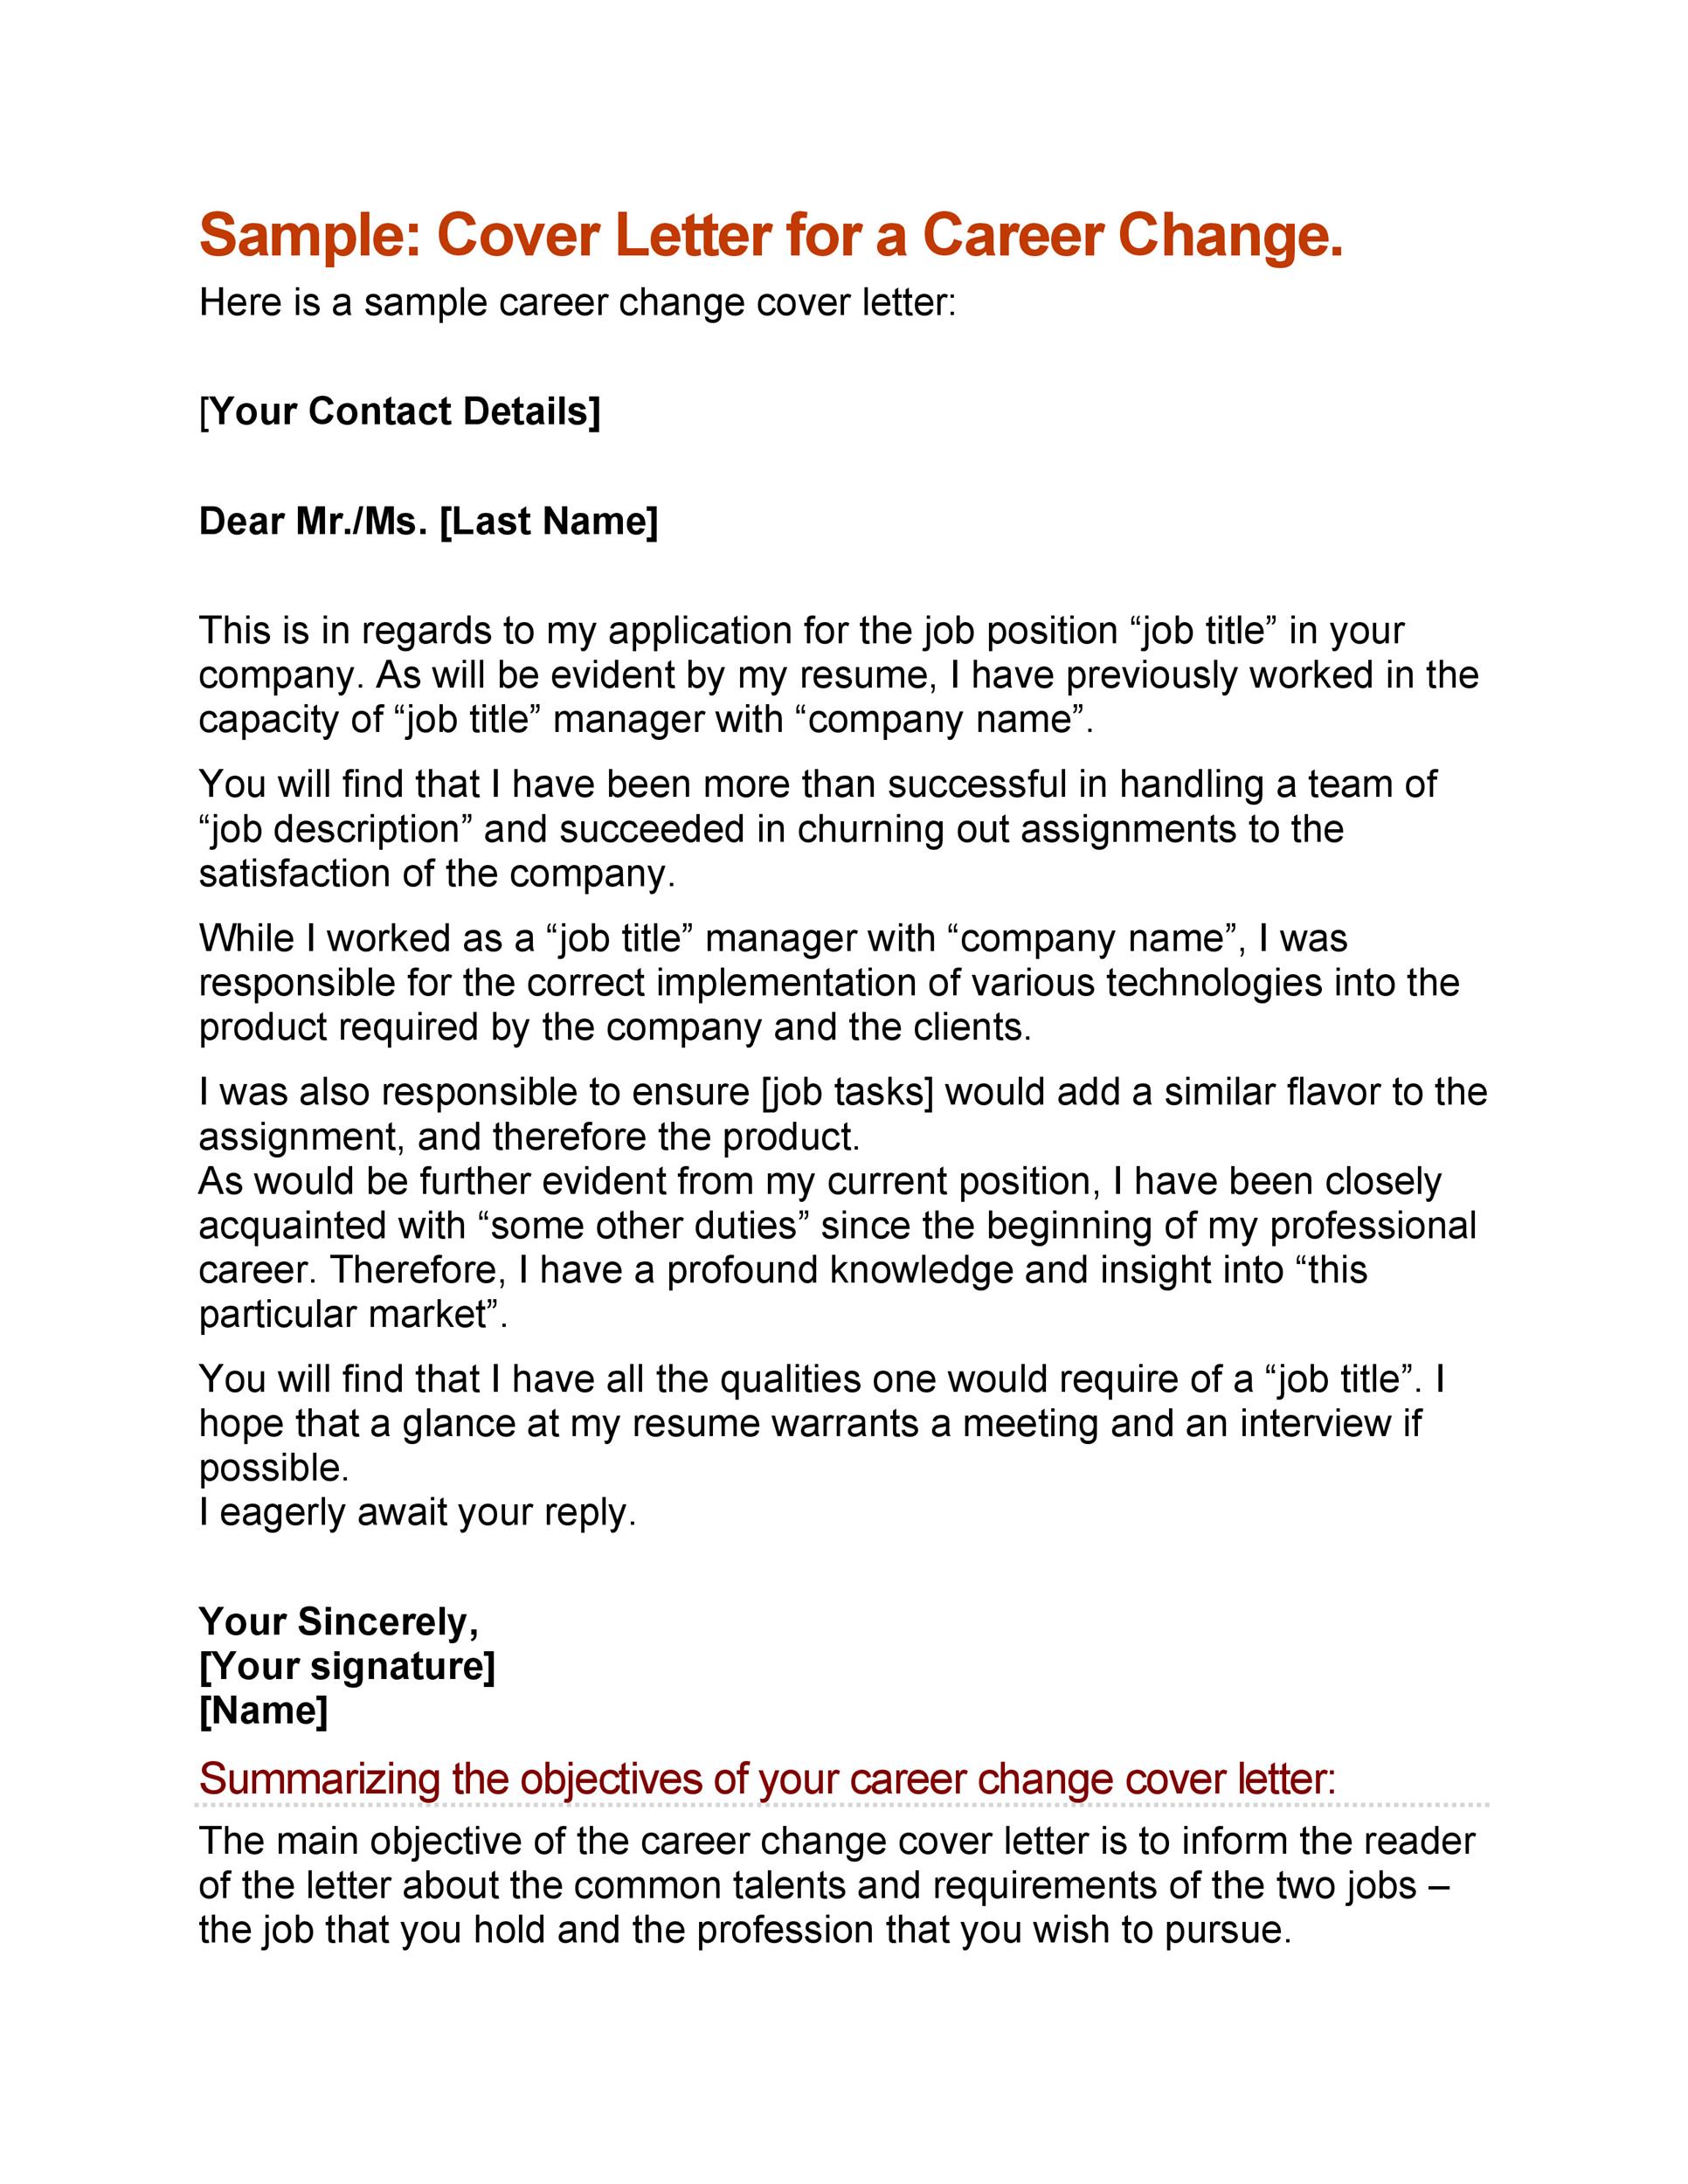 Free career change cover letter 15